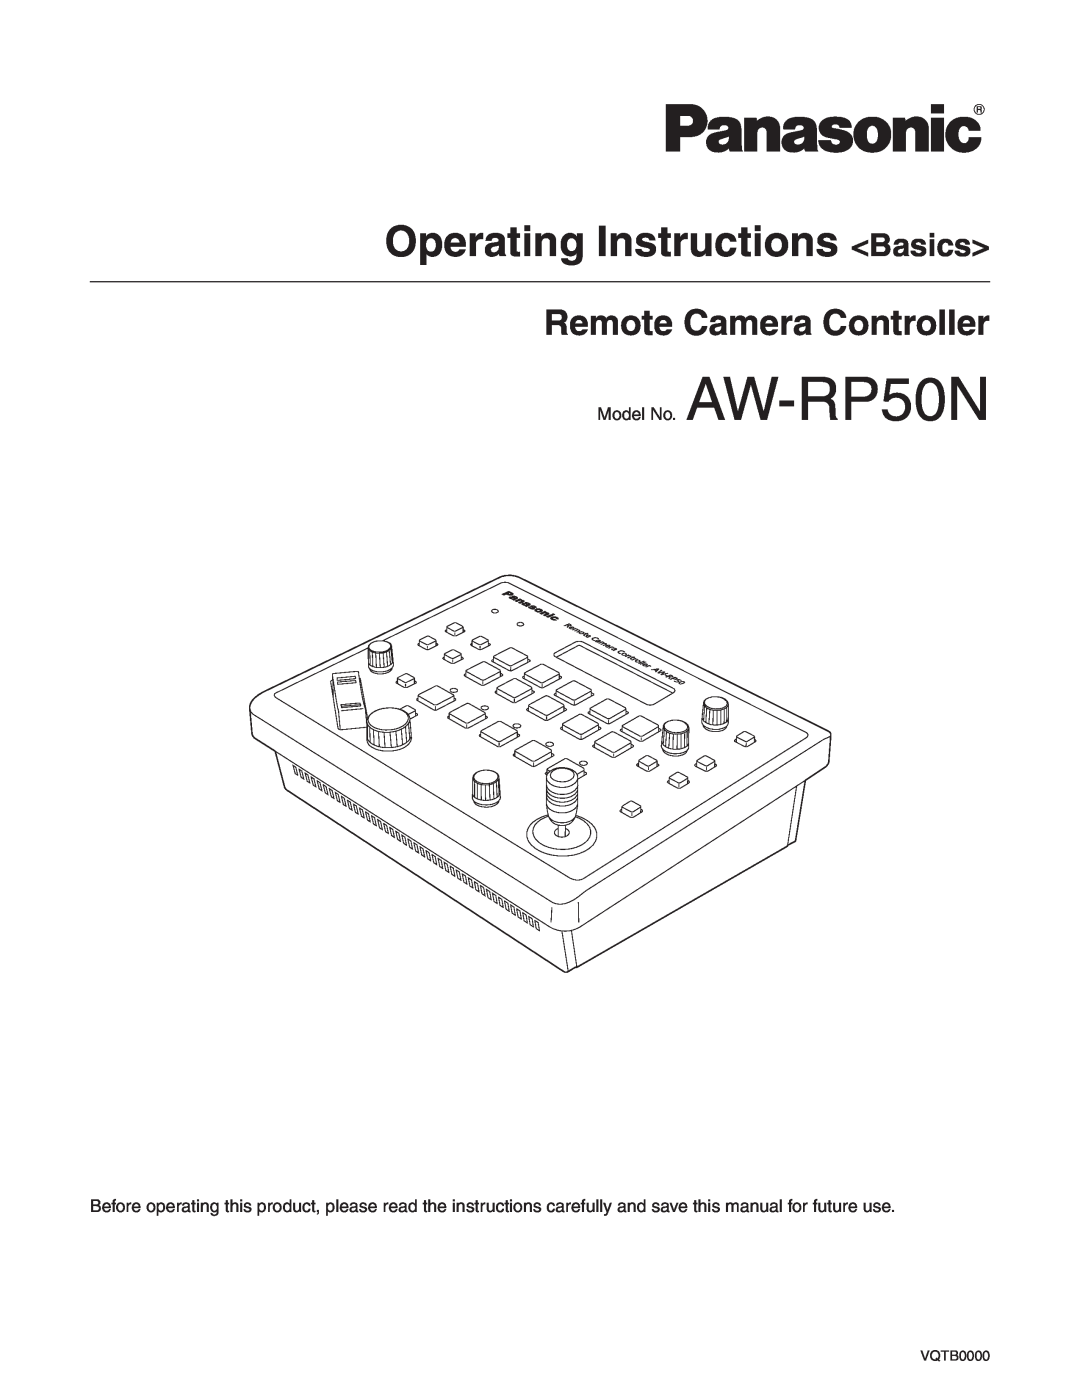 Panasonic operating instructions Operating Instructions Basics, Remote Camera Controller, Model No. AW-RP50N 